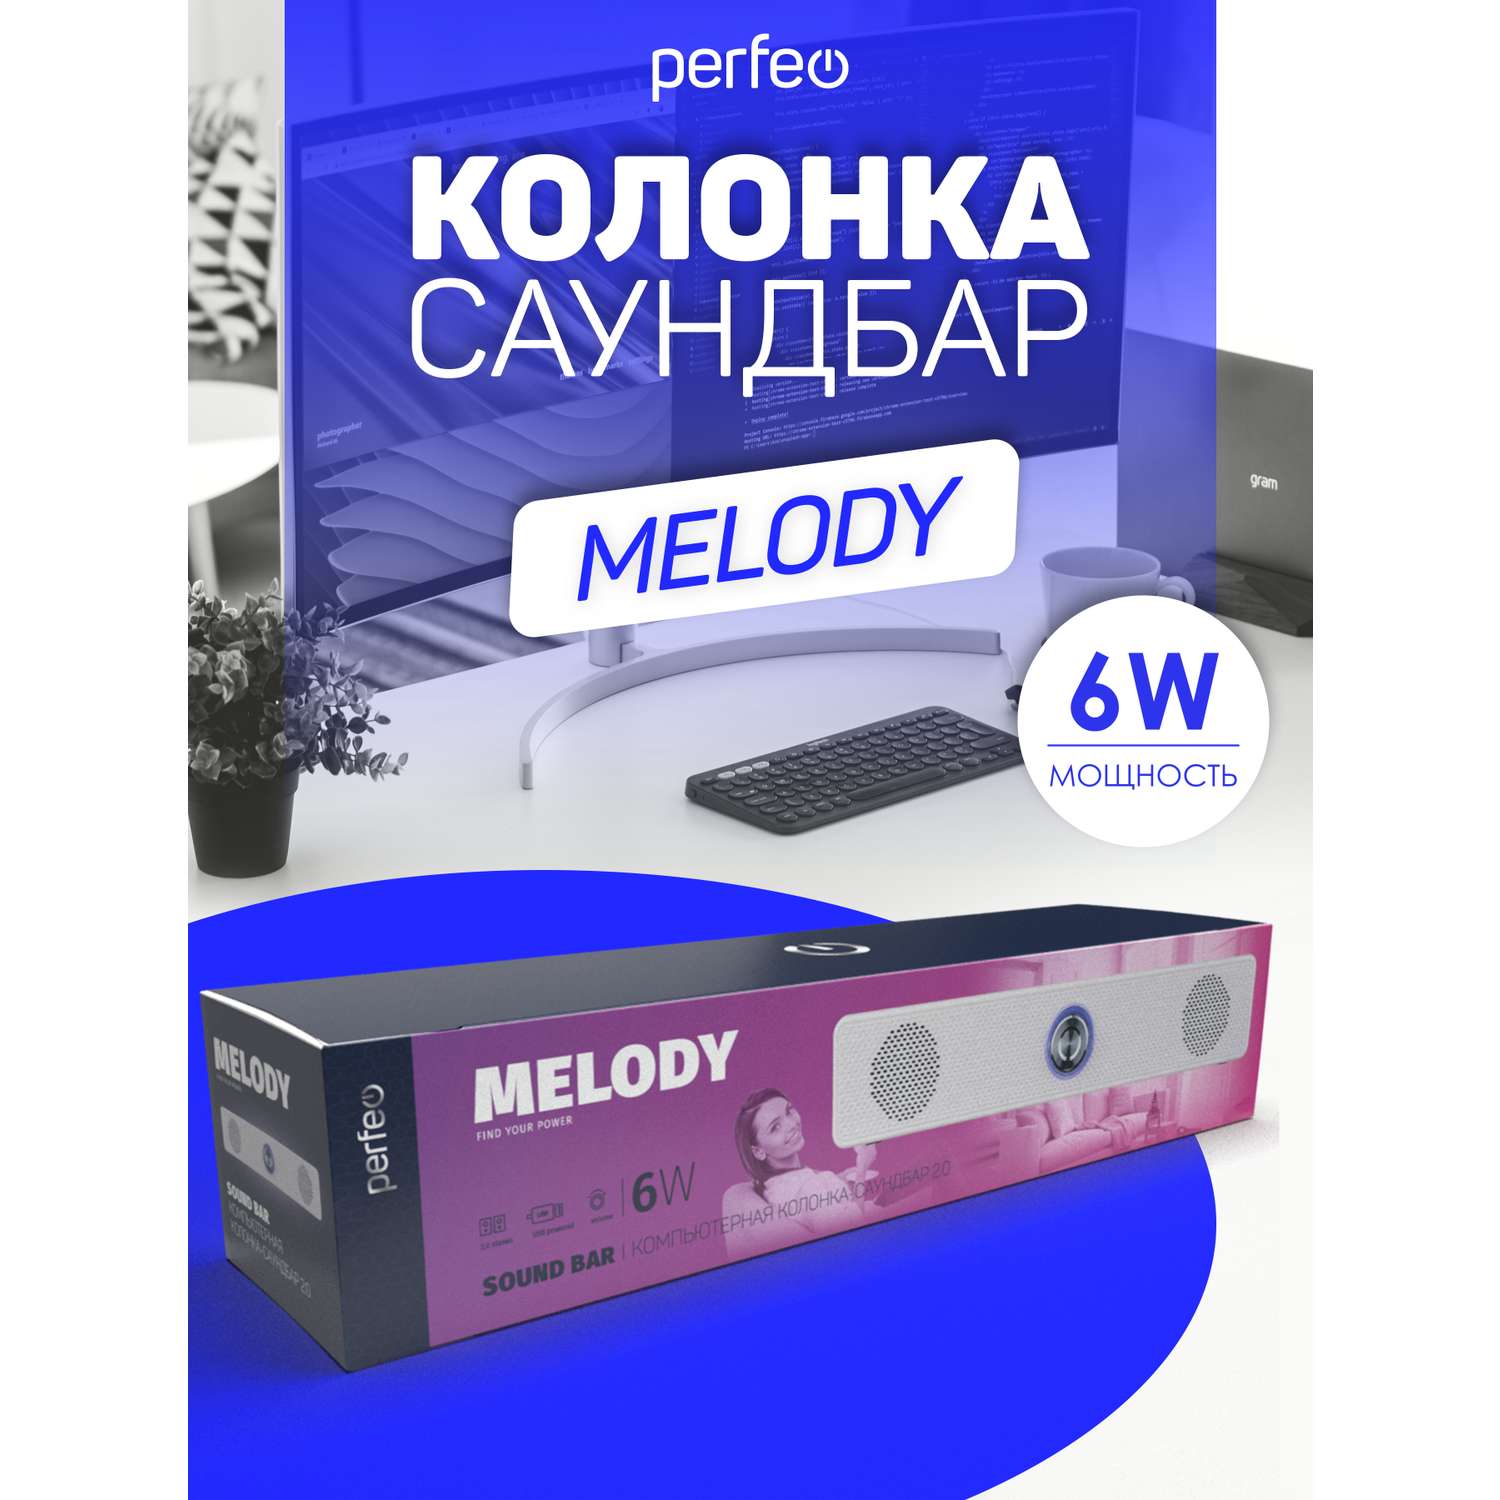 Колонка-саундбар Perfeo компьютерная MELODY мощность 6 Вт USB пластик белый - фото 5